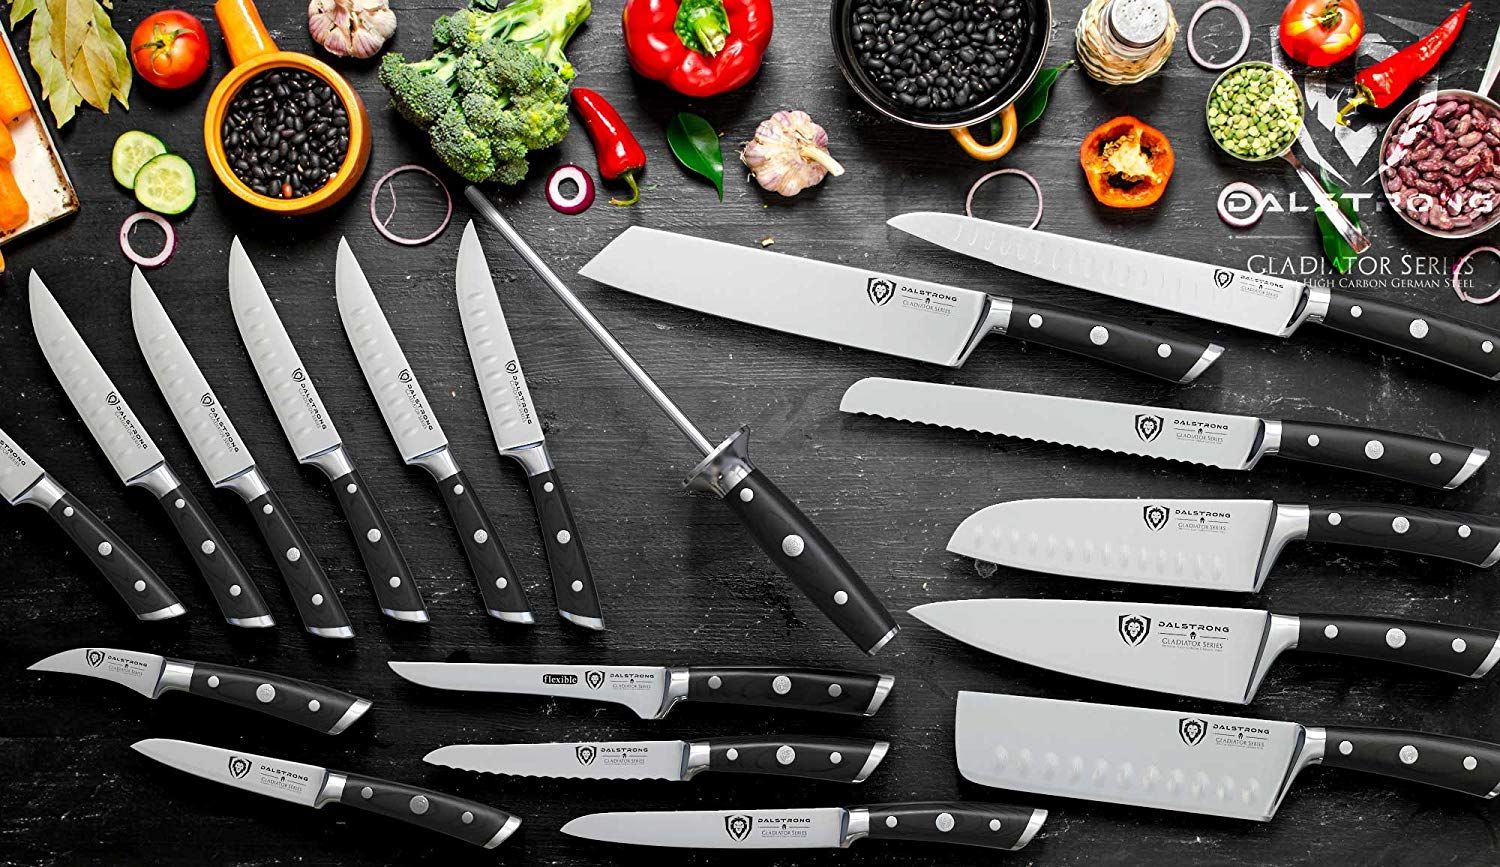 DALSTRONG Knife Set Block - 8 Piece - Gladiator Series - German High Carbon  Steel Kitchen Set - Premium Food-Grade Black ABS Polymer Handles - Premium